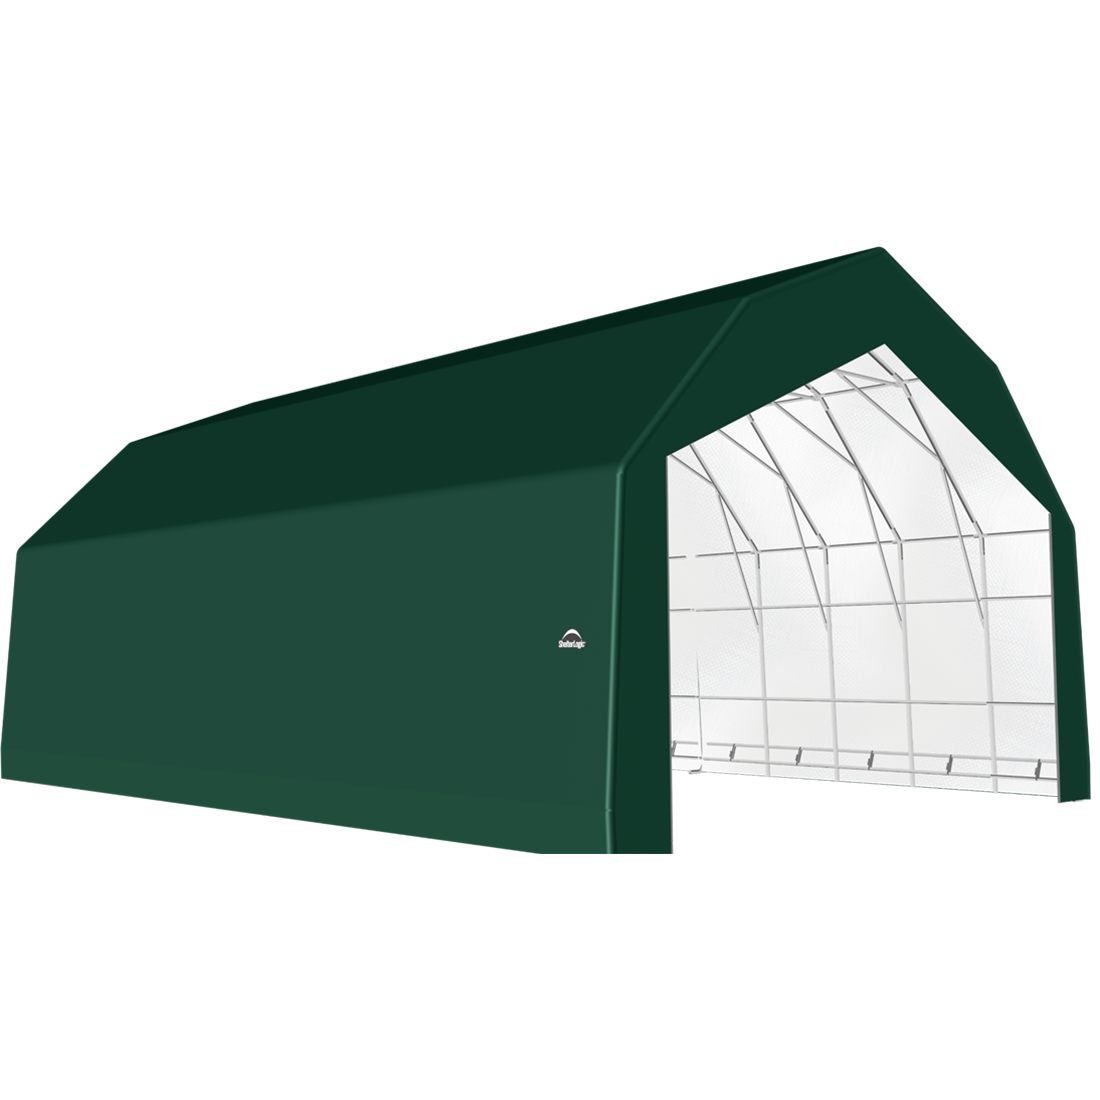 ShelterTech SP Series Barn Shelter, 30 ft. x 32 ft. x 21 ft. Heavy Duty PVC 14.5 oz. Green